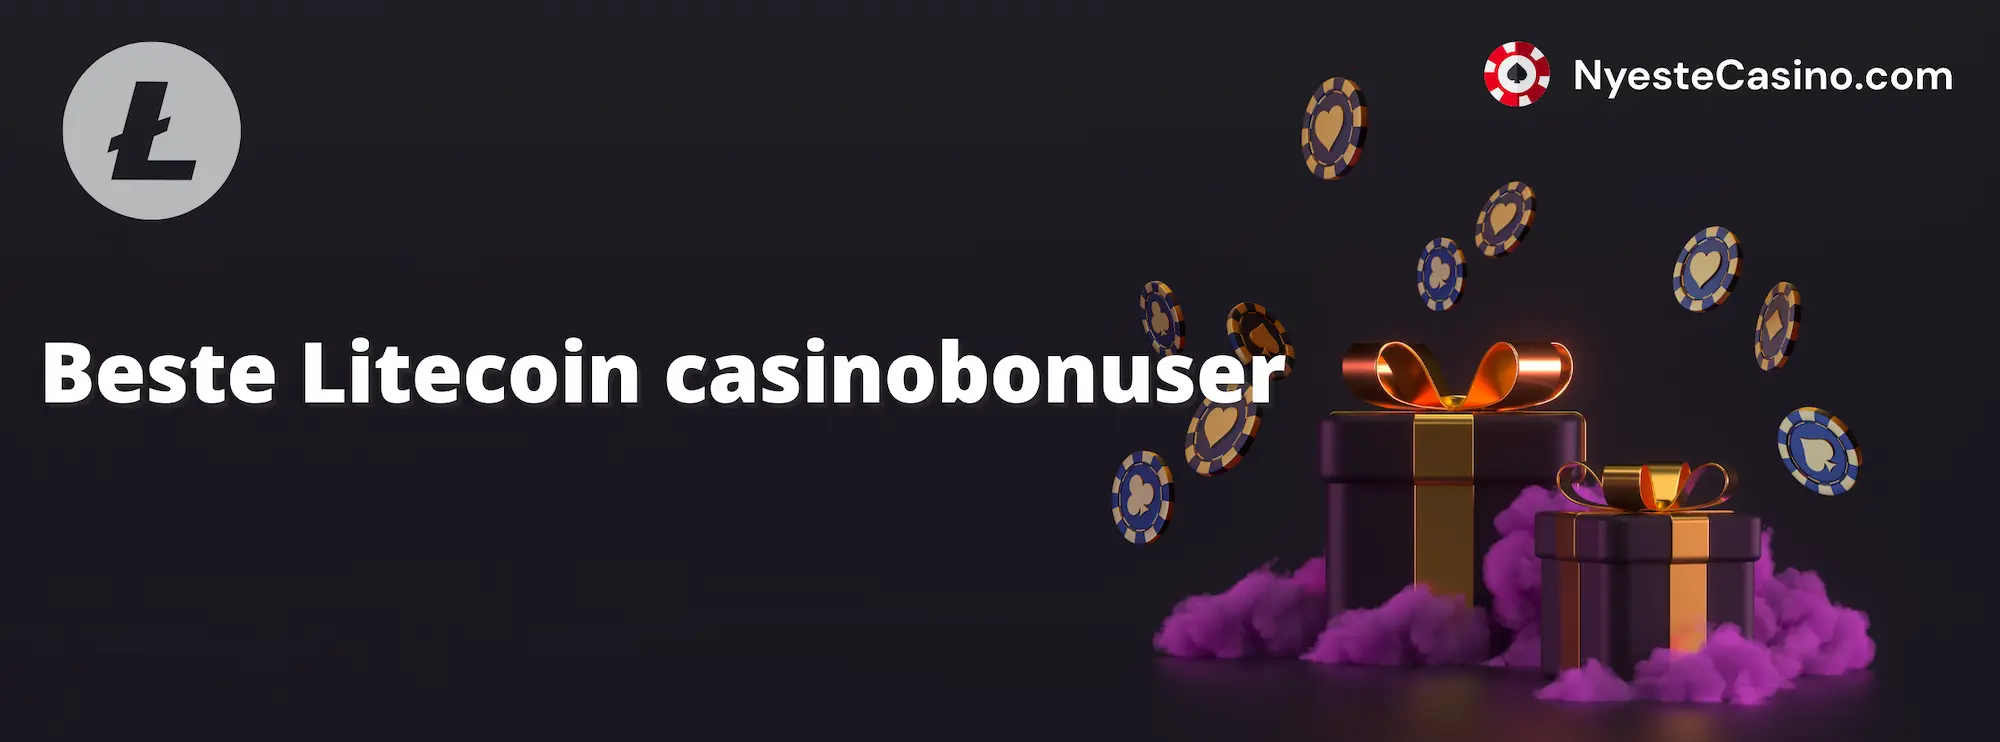 Litecoin Casino Bonuser